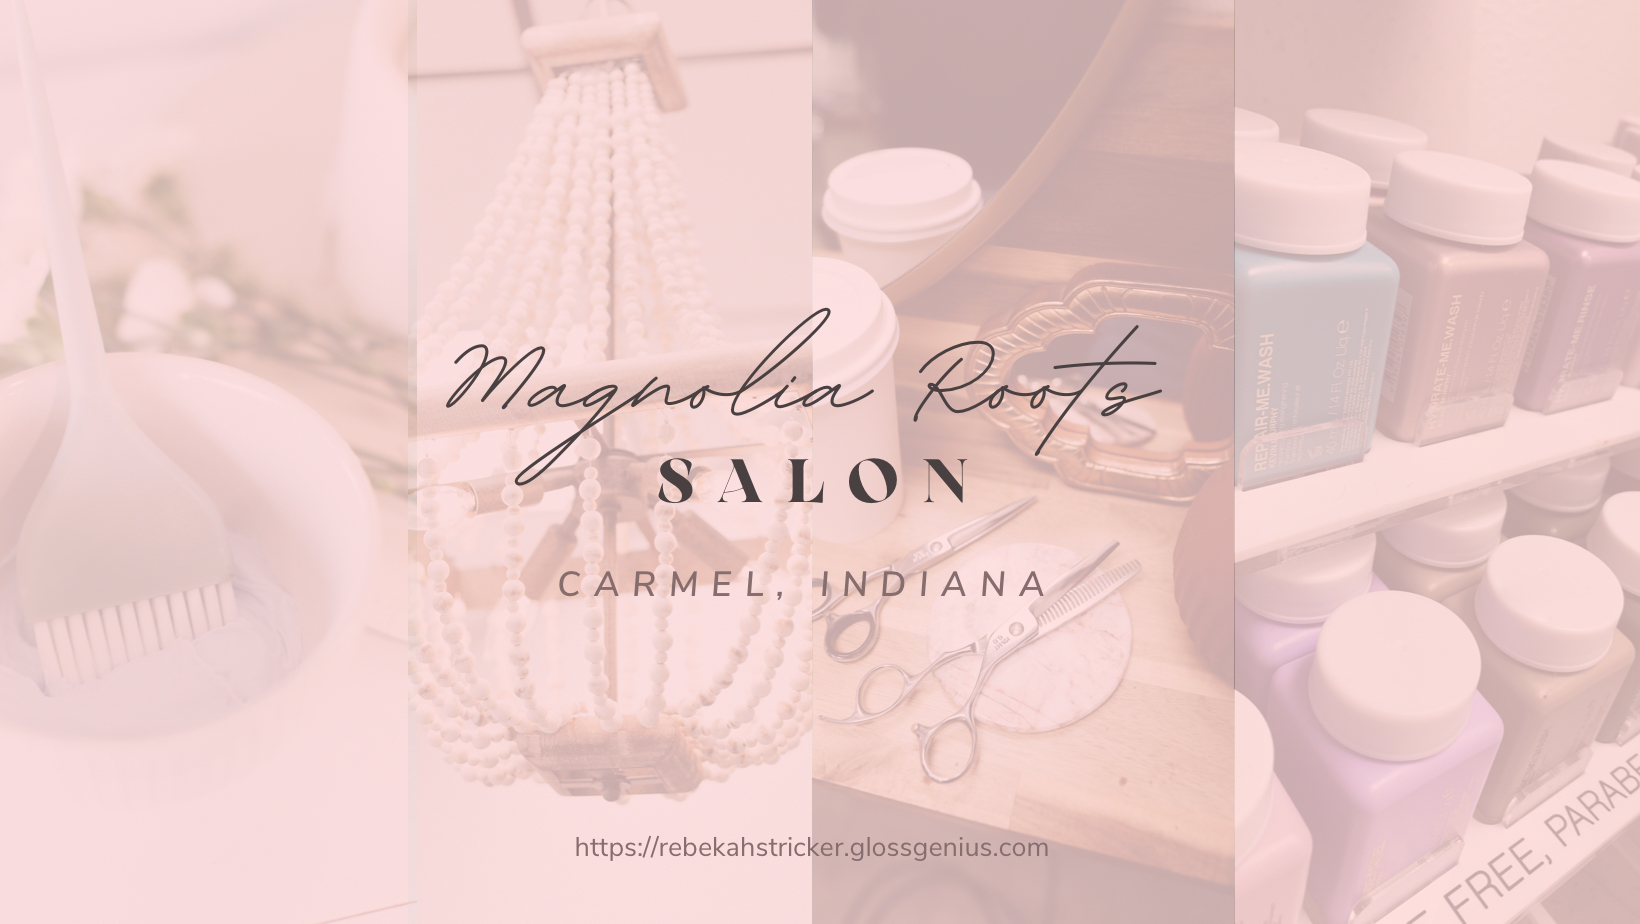 Magnolia Roots Salon